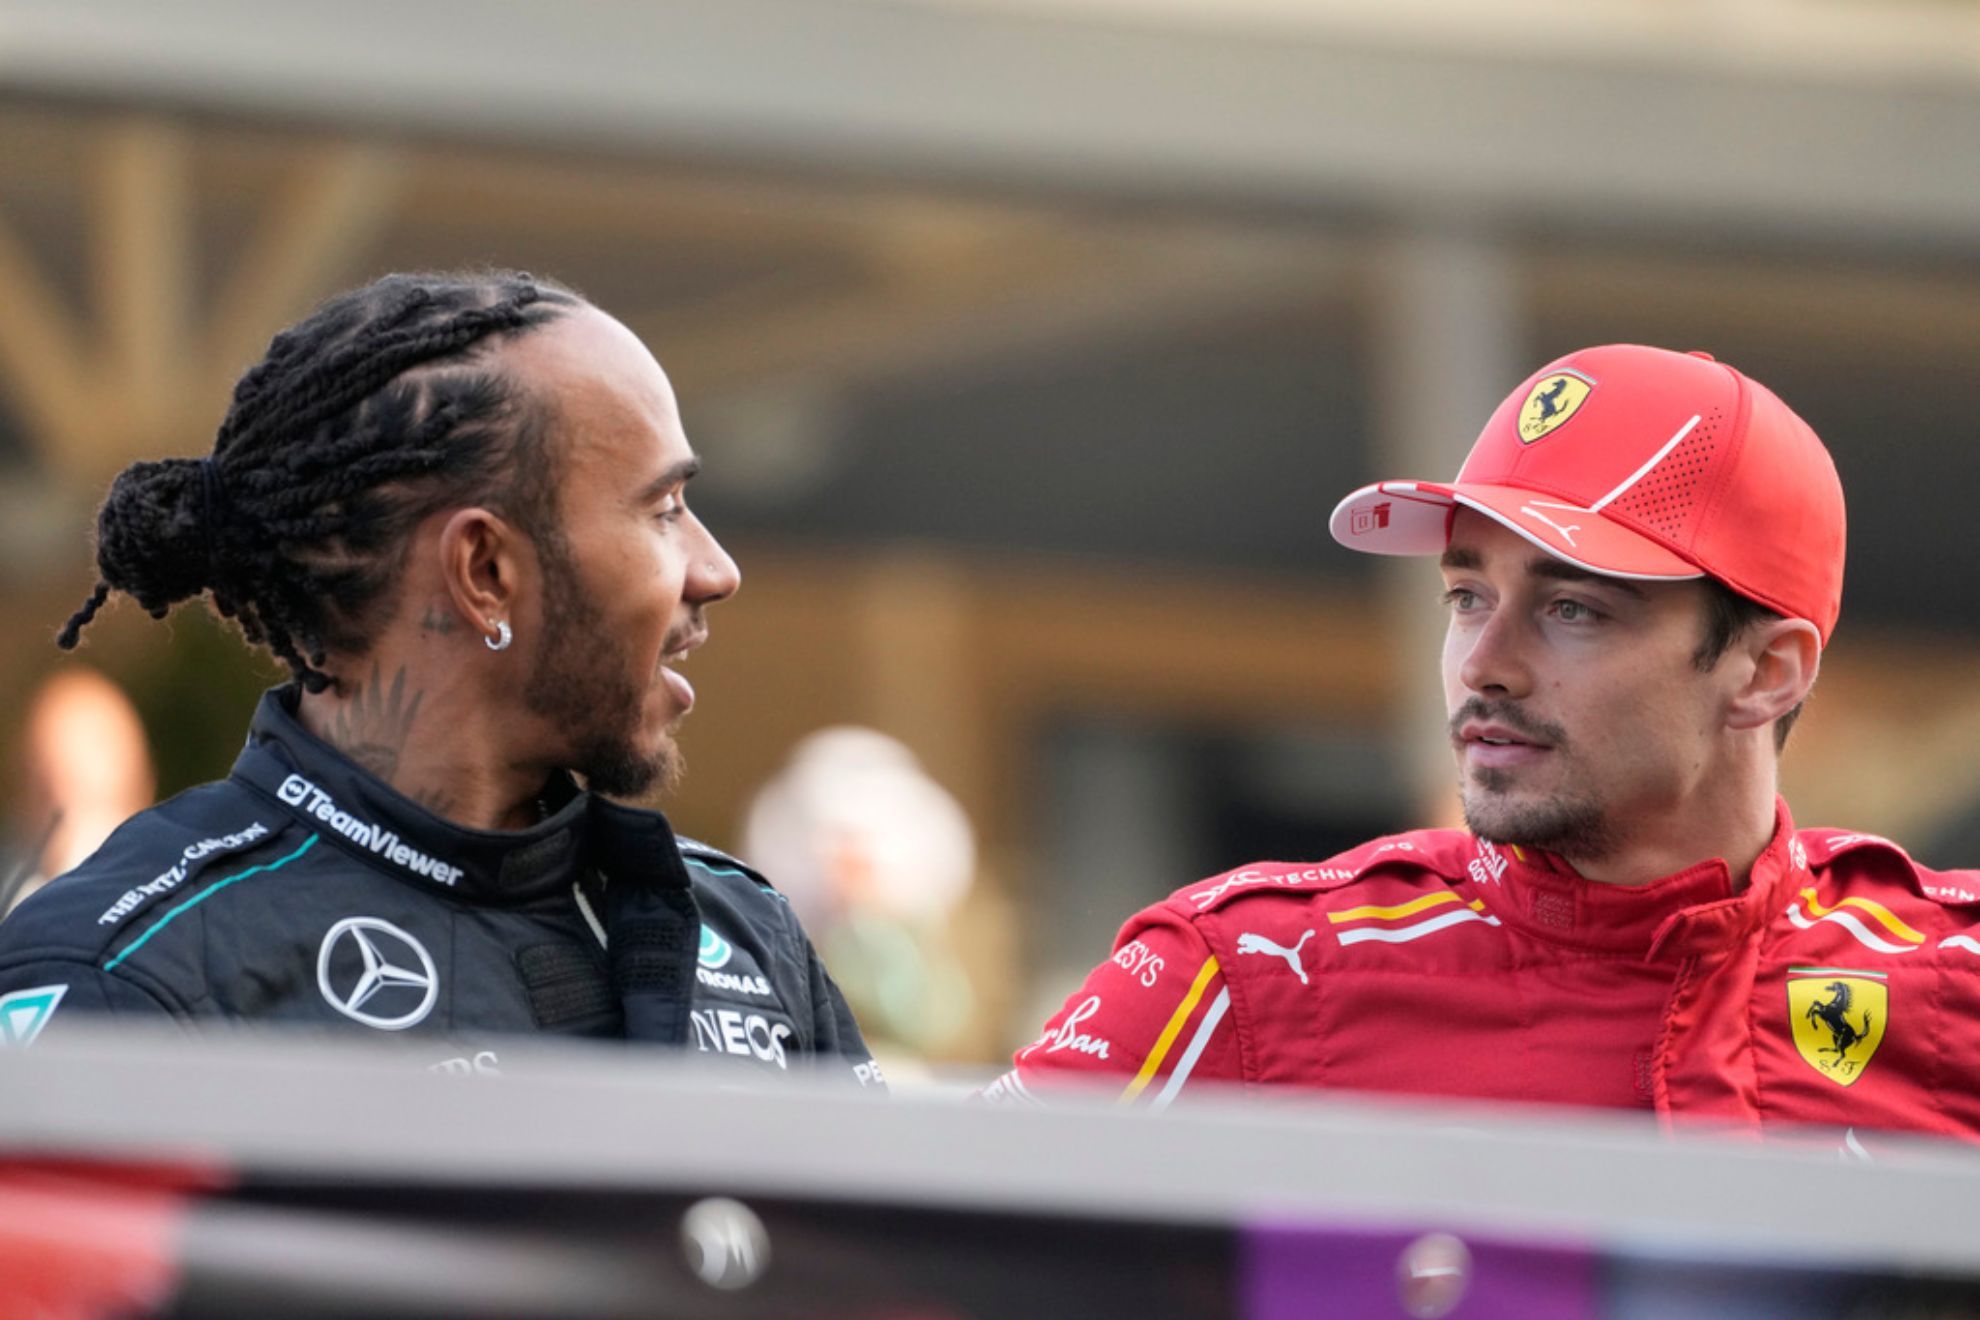 Hamilton is now part of Ferraris racing team